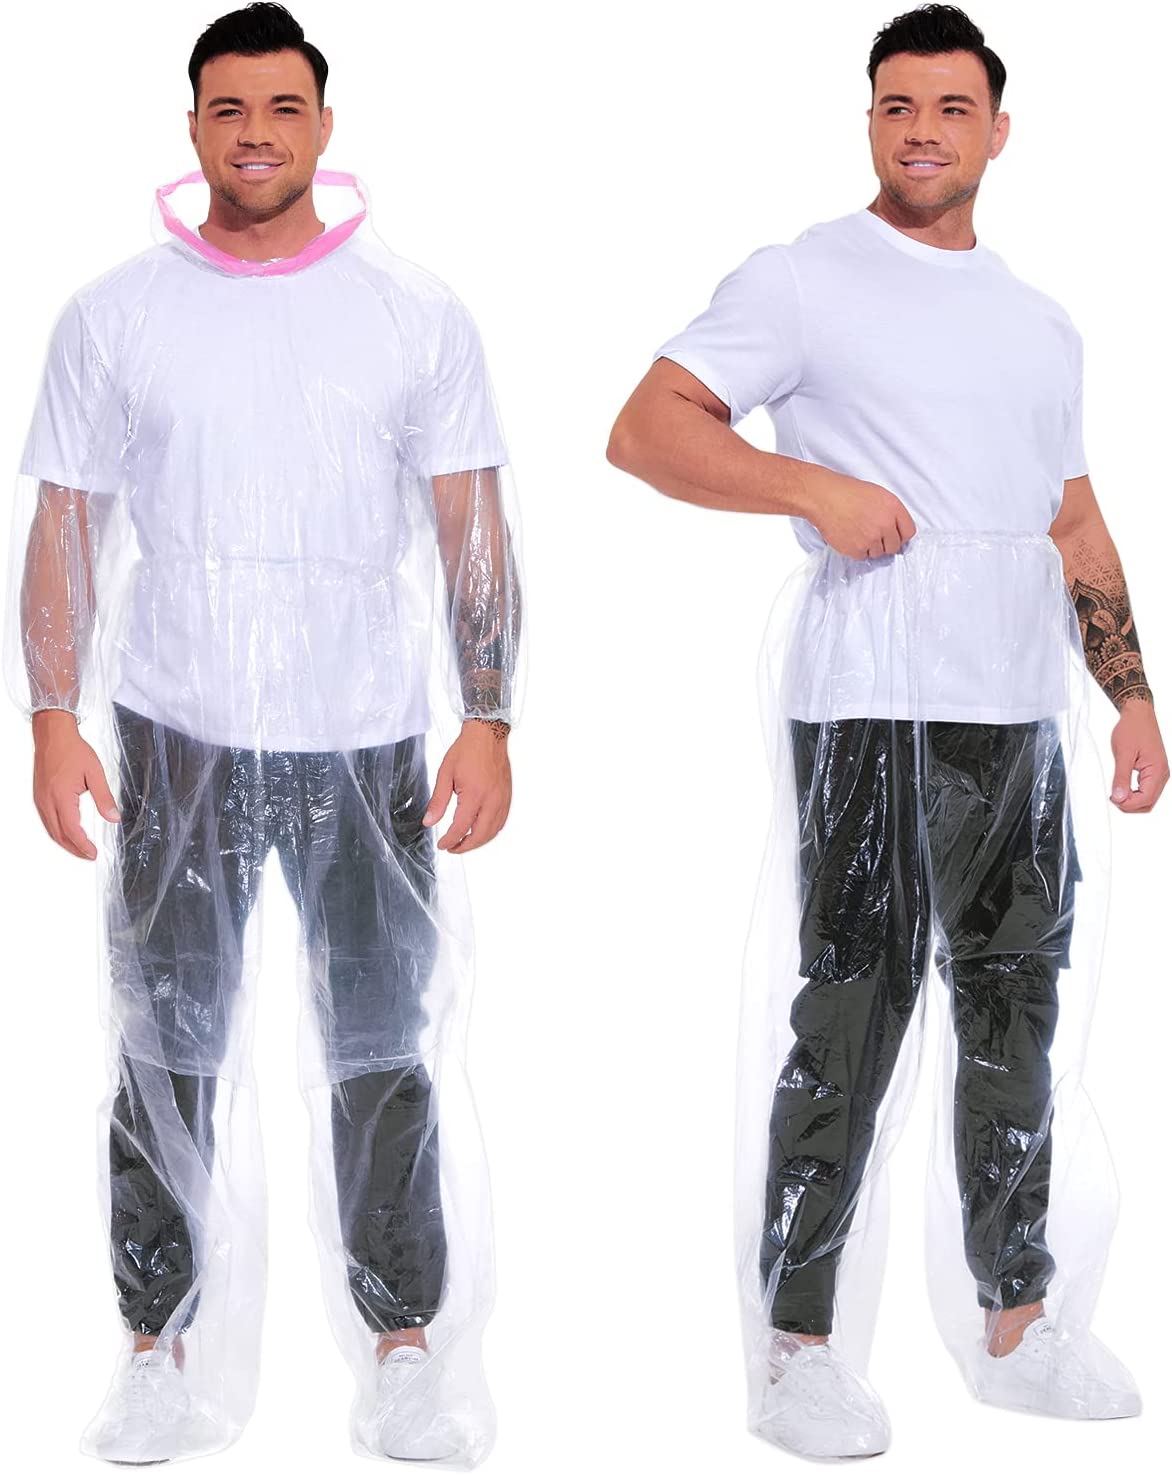 Molirex Raincoat Set Disposable 2 Pack Plus Size Adult Rain Ponchos with Drawstring Hood Rain Coats Emergency Waterproof Raincoats Rainpants Suit